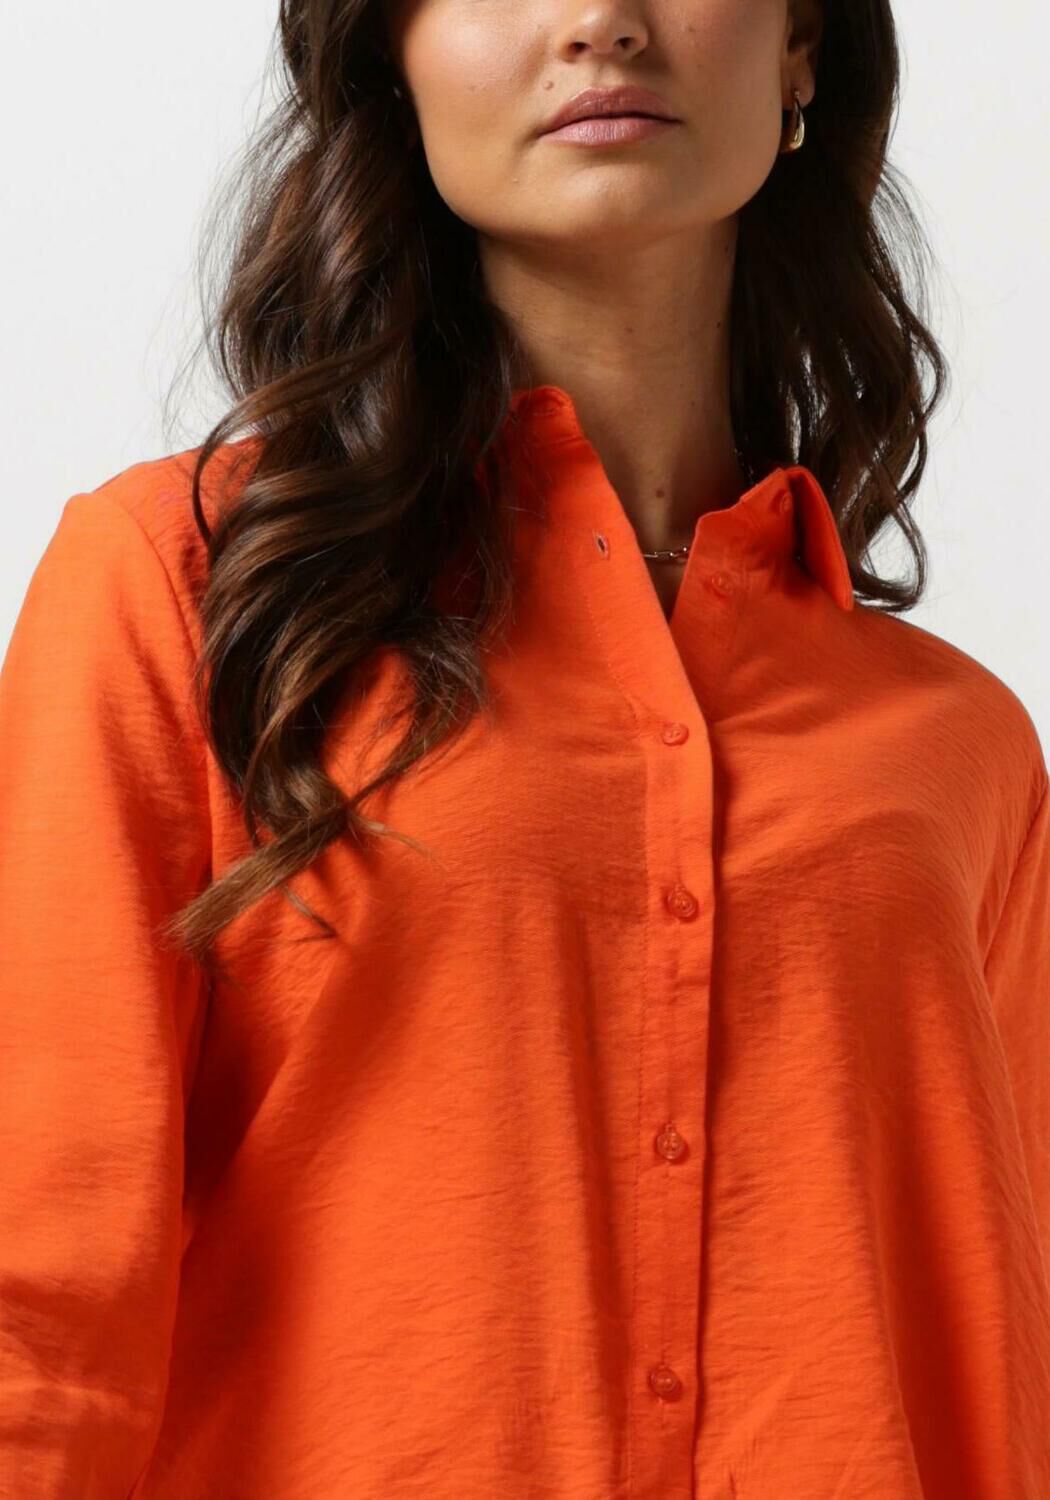 MODSTRÖM Modström Dames Blouses Hudgesmd Shirt Oranje